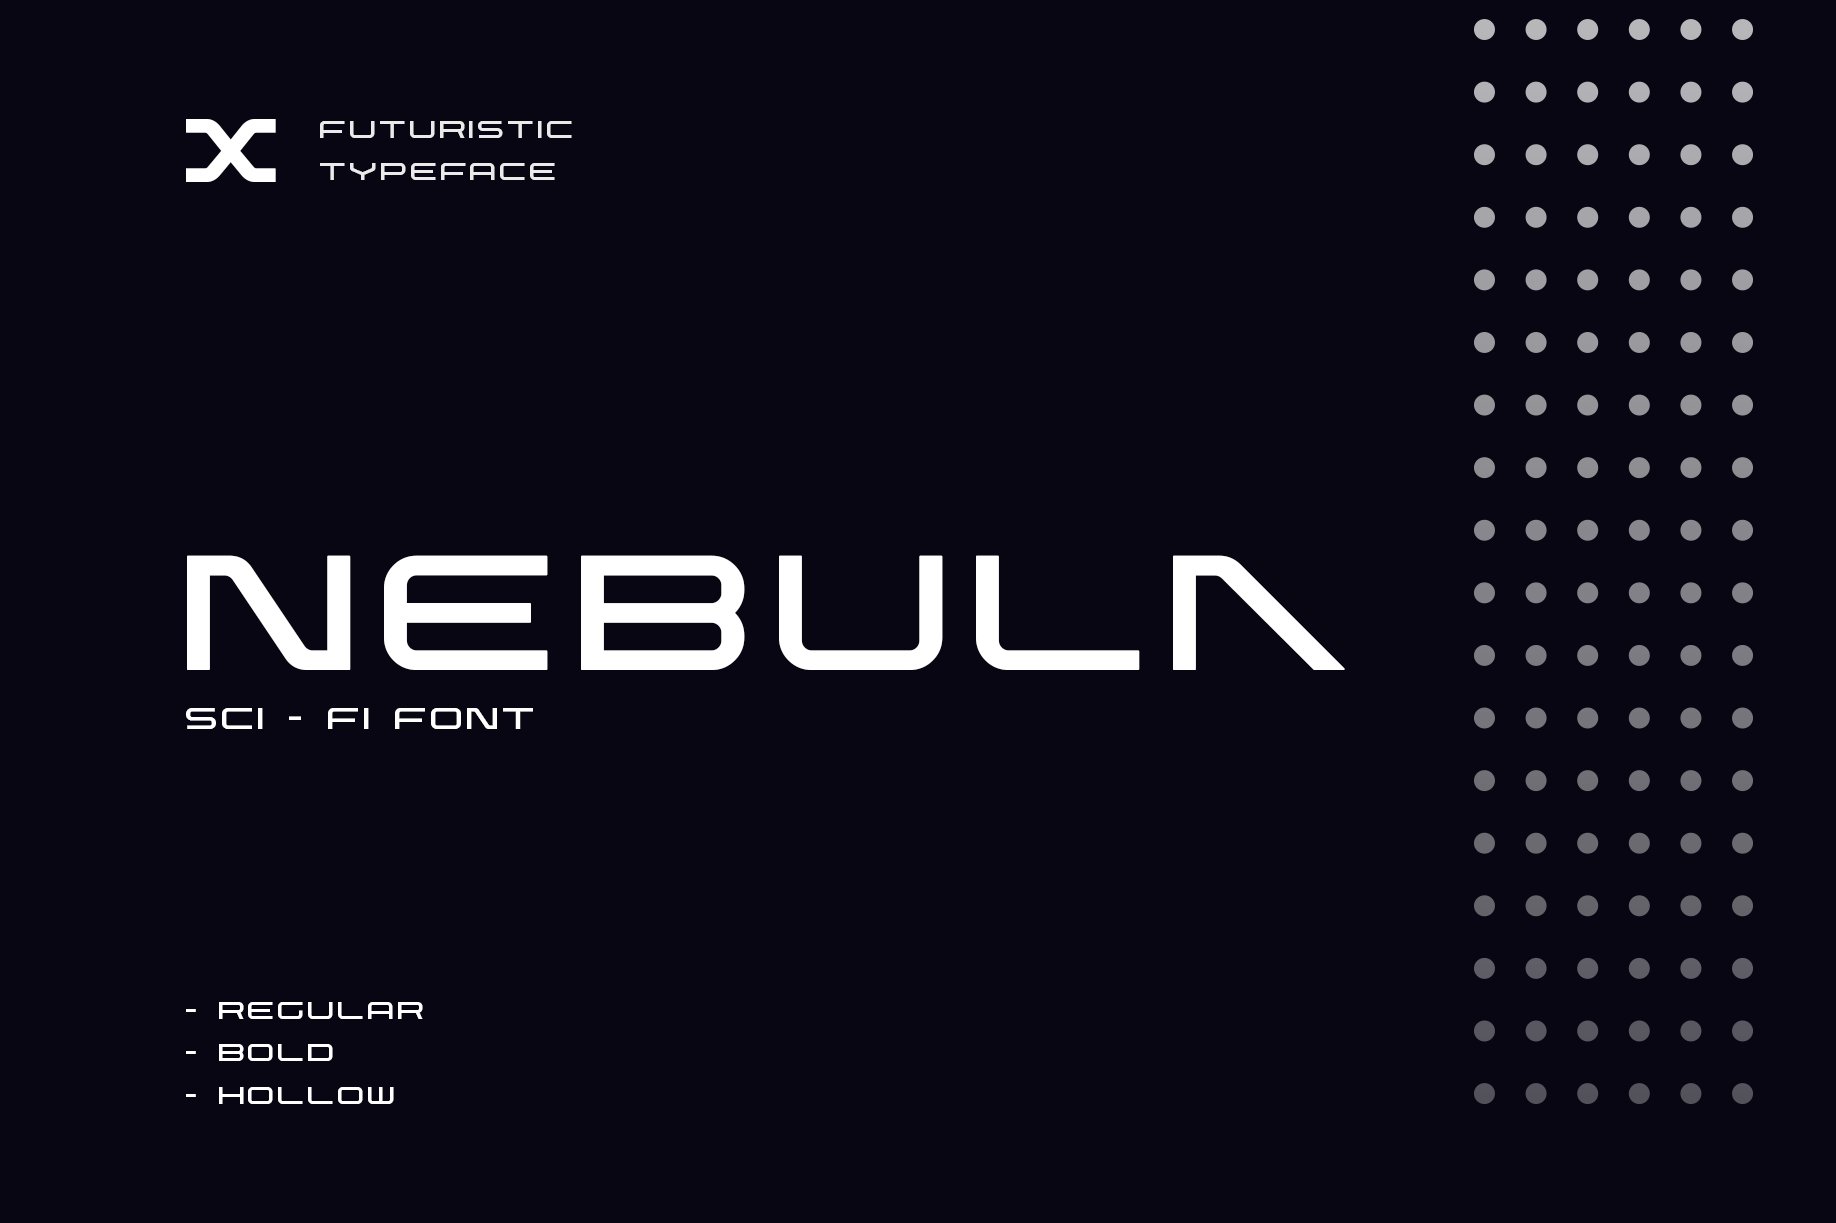 Nebula Font cover image.